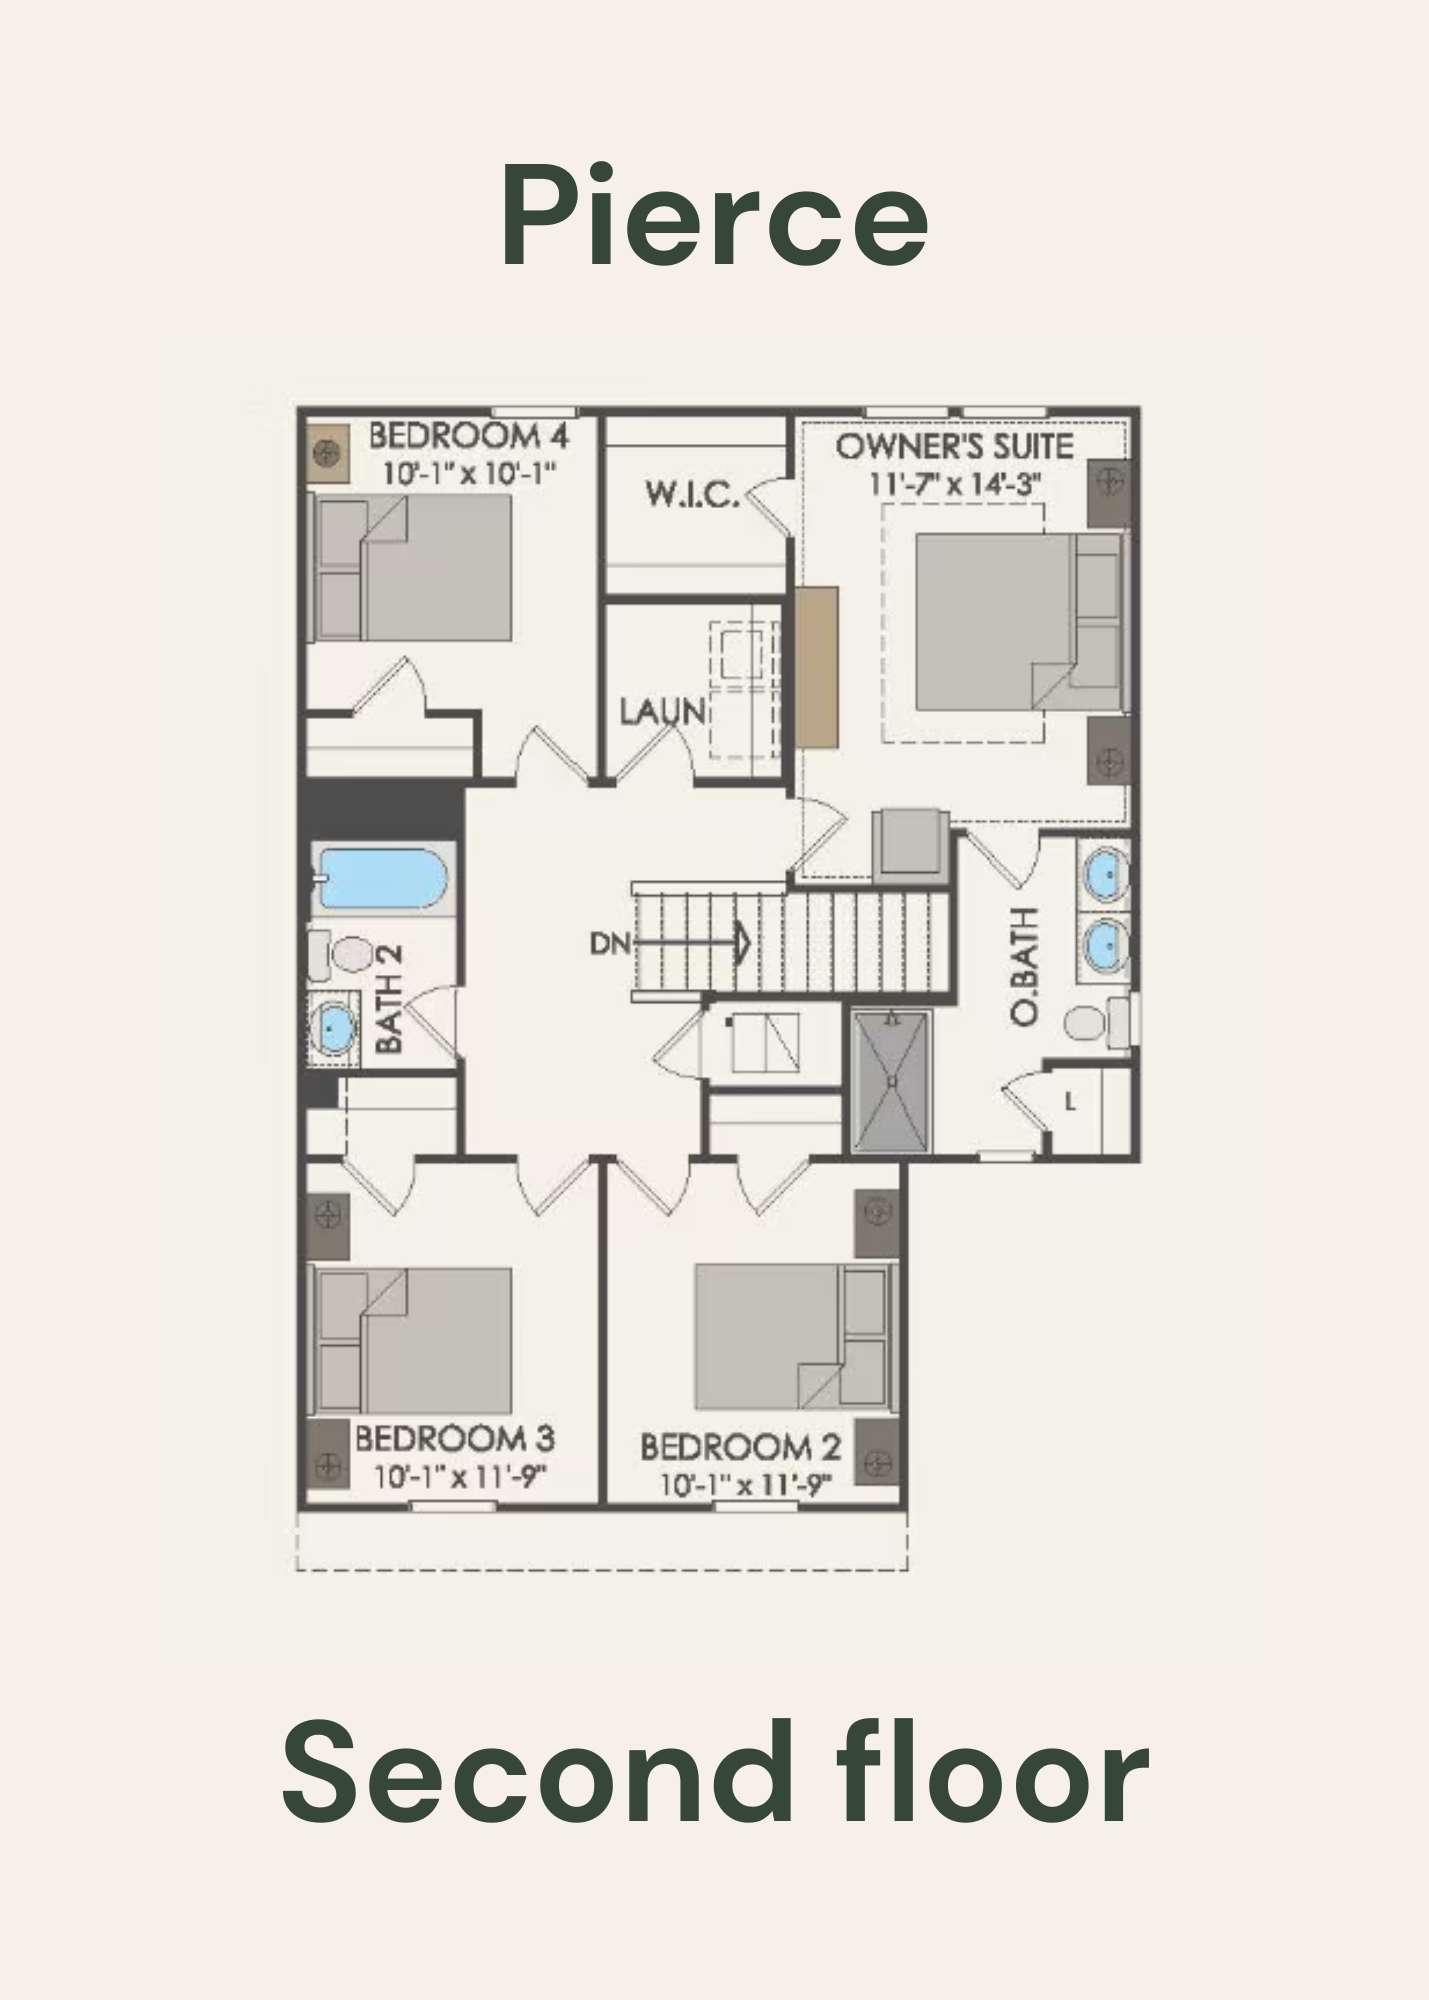 Pierce Second Floor - Floor Plan by Centex Homes